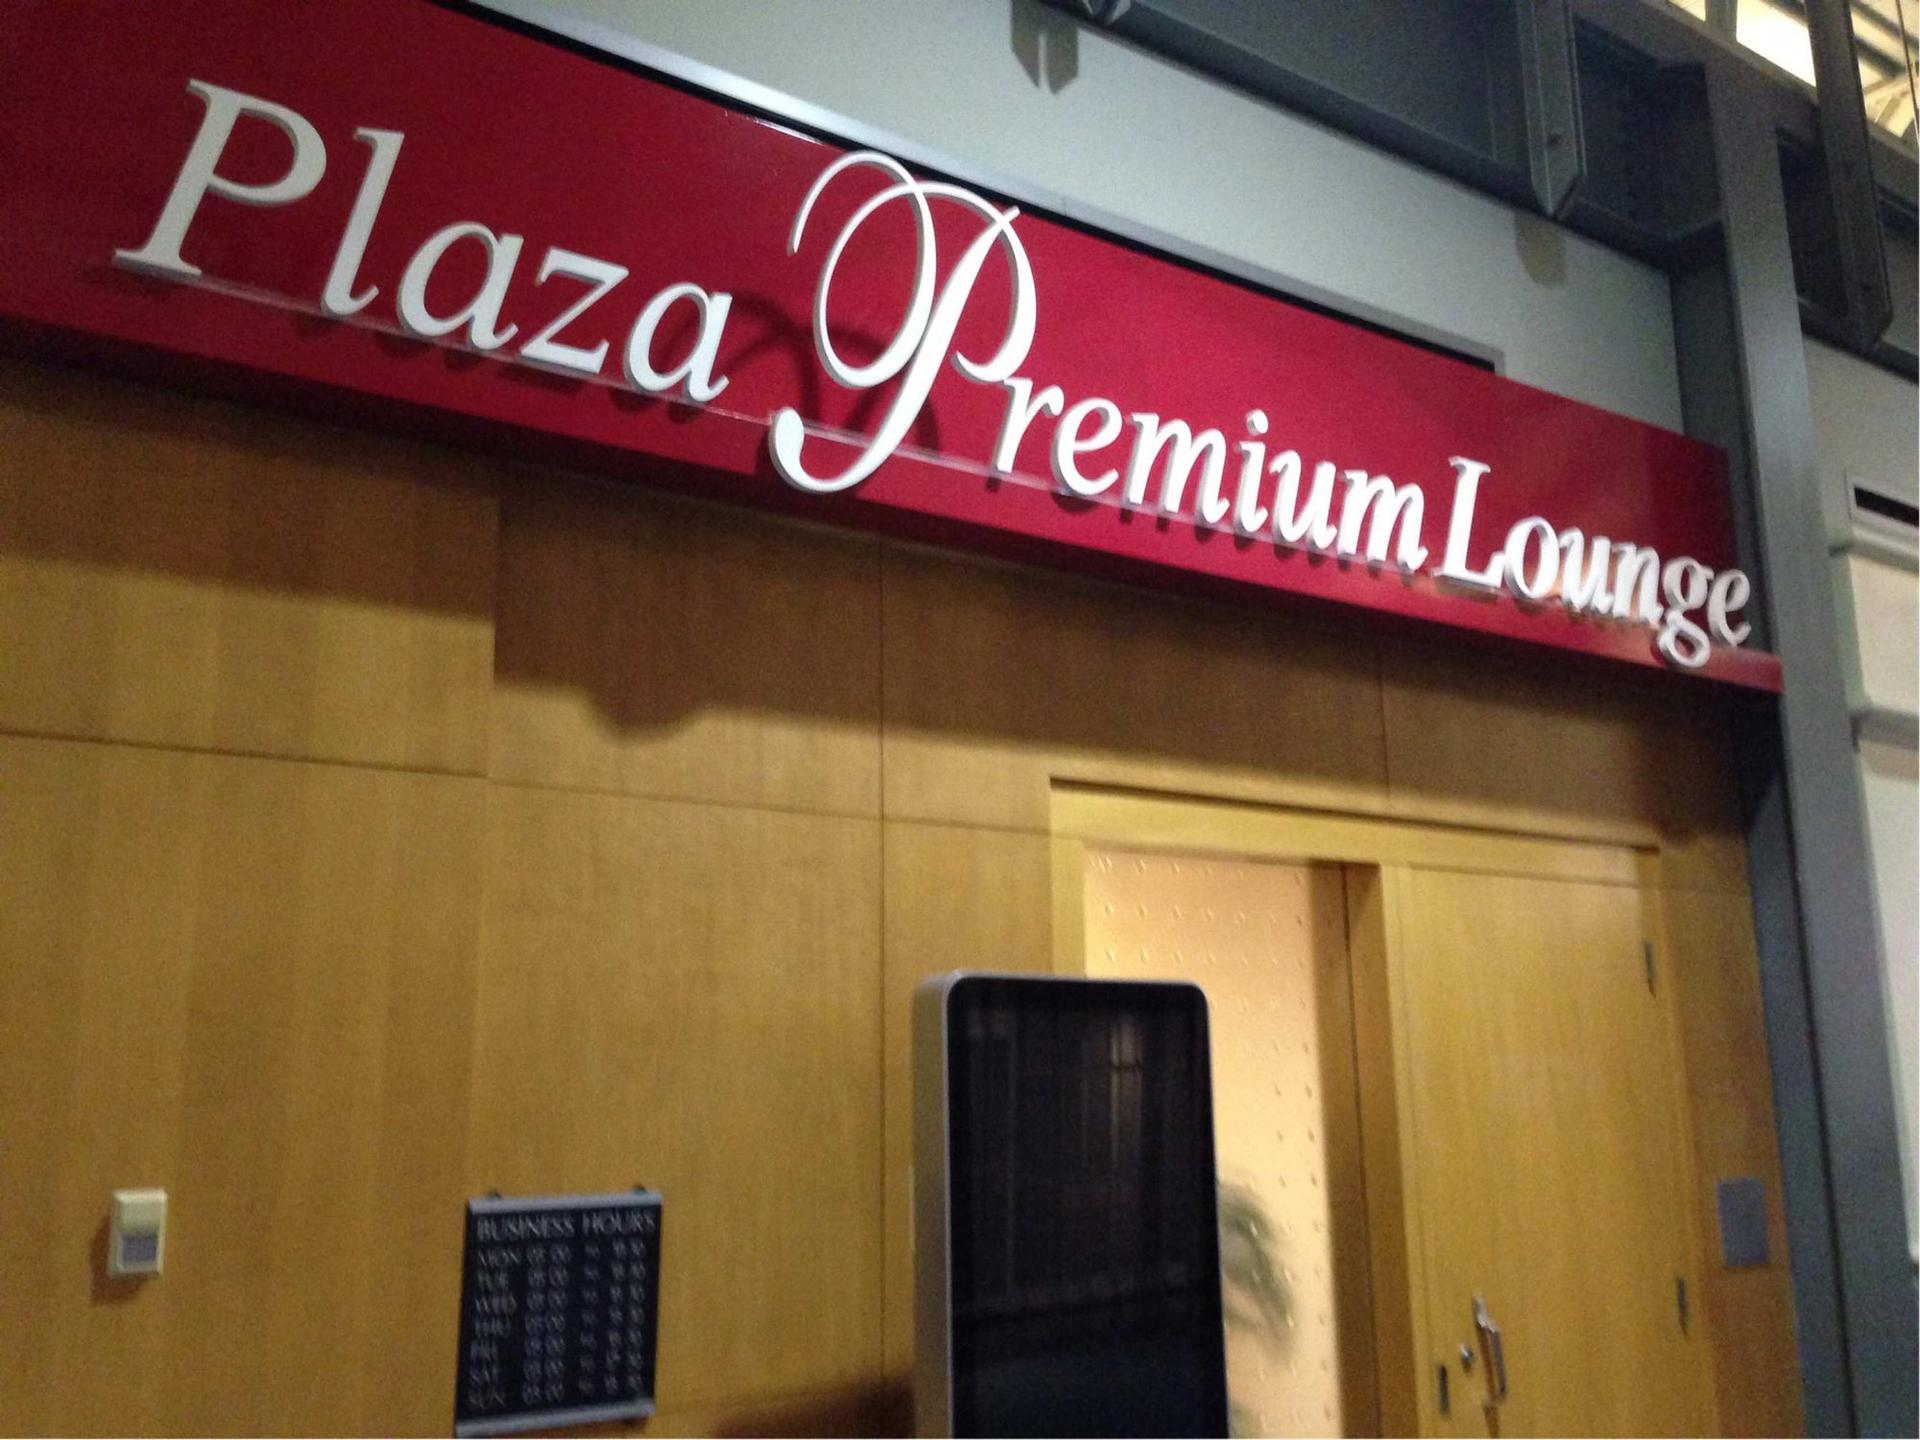 Plaza Premium Lounge image 15 of 57